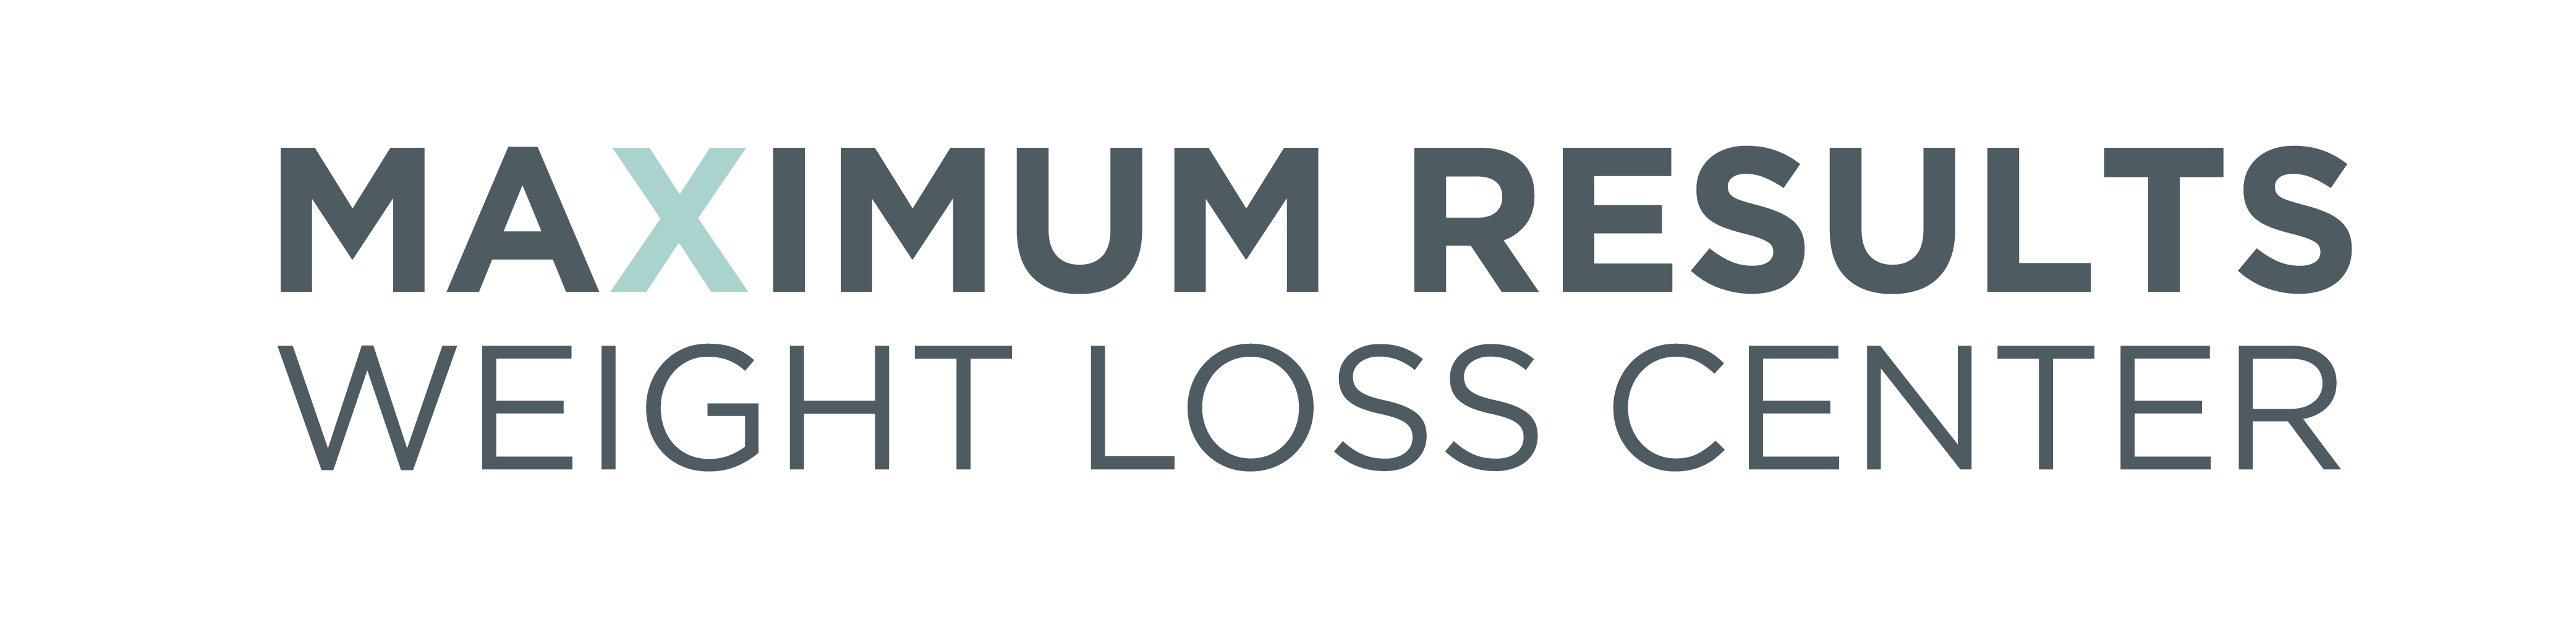 Maximum Results Weight Loss Center Logo